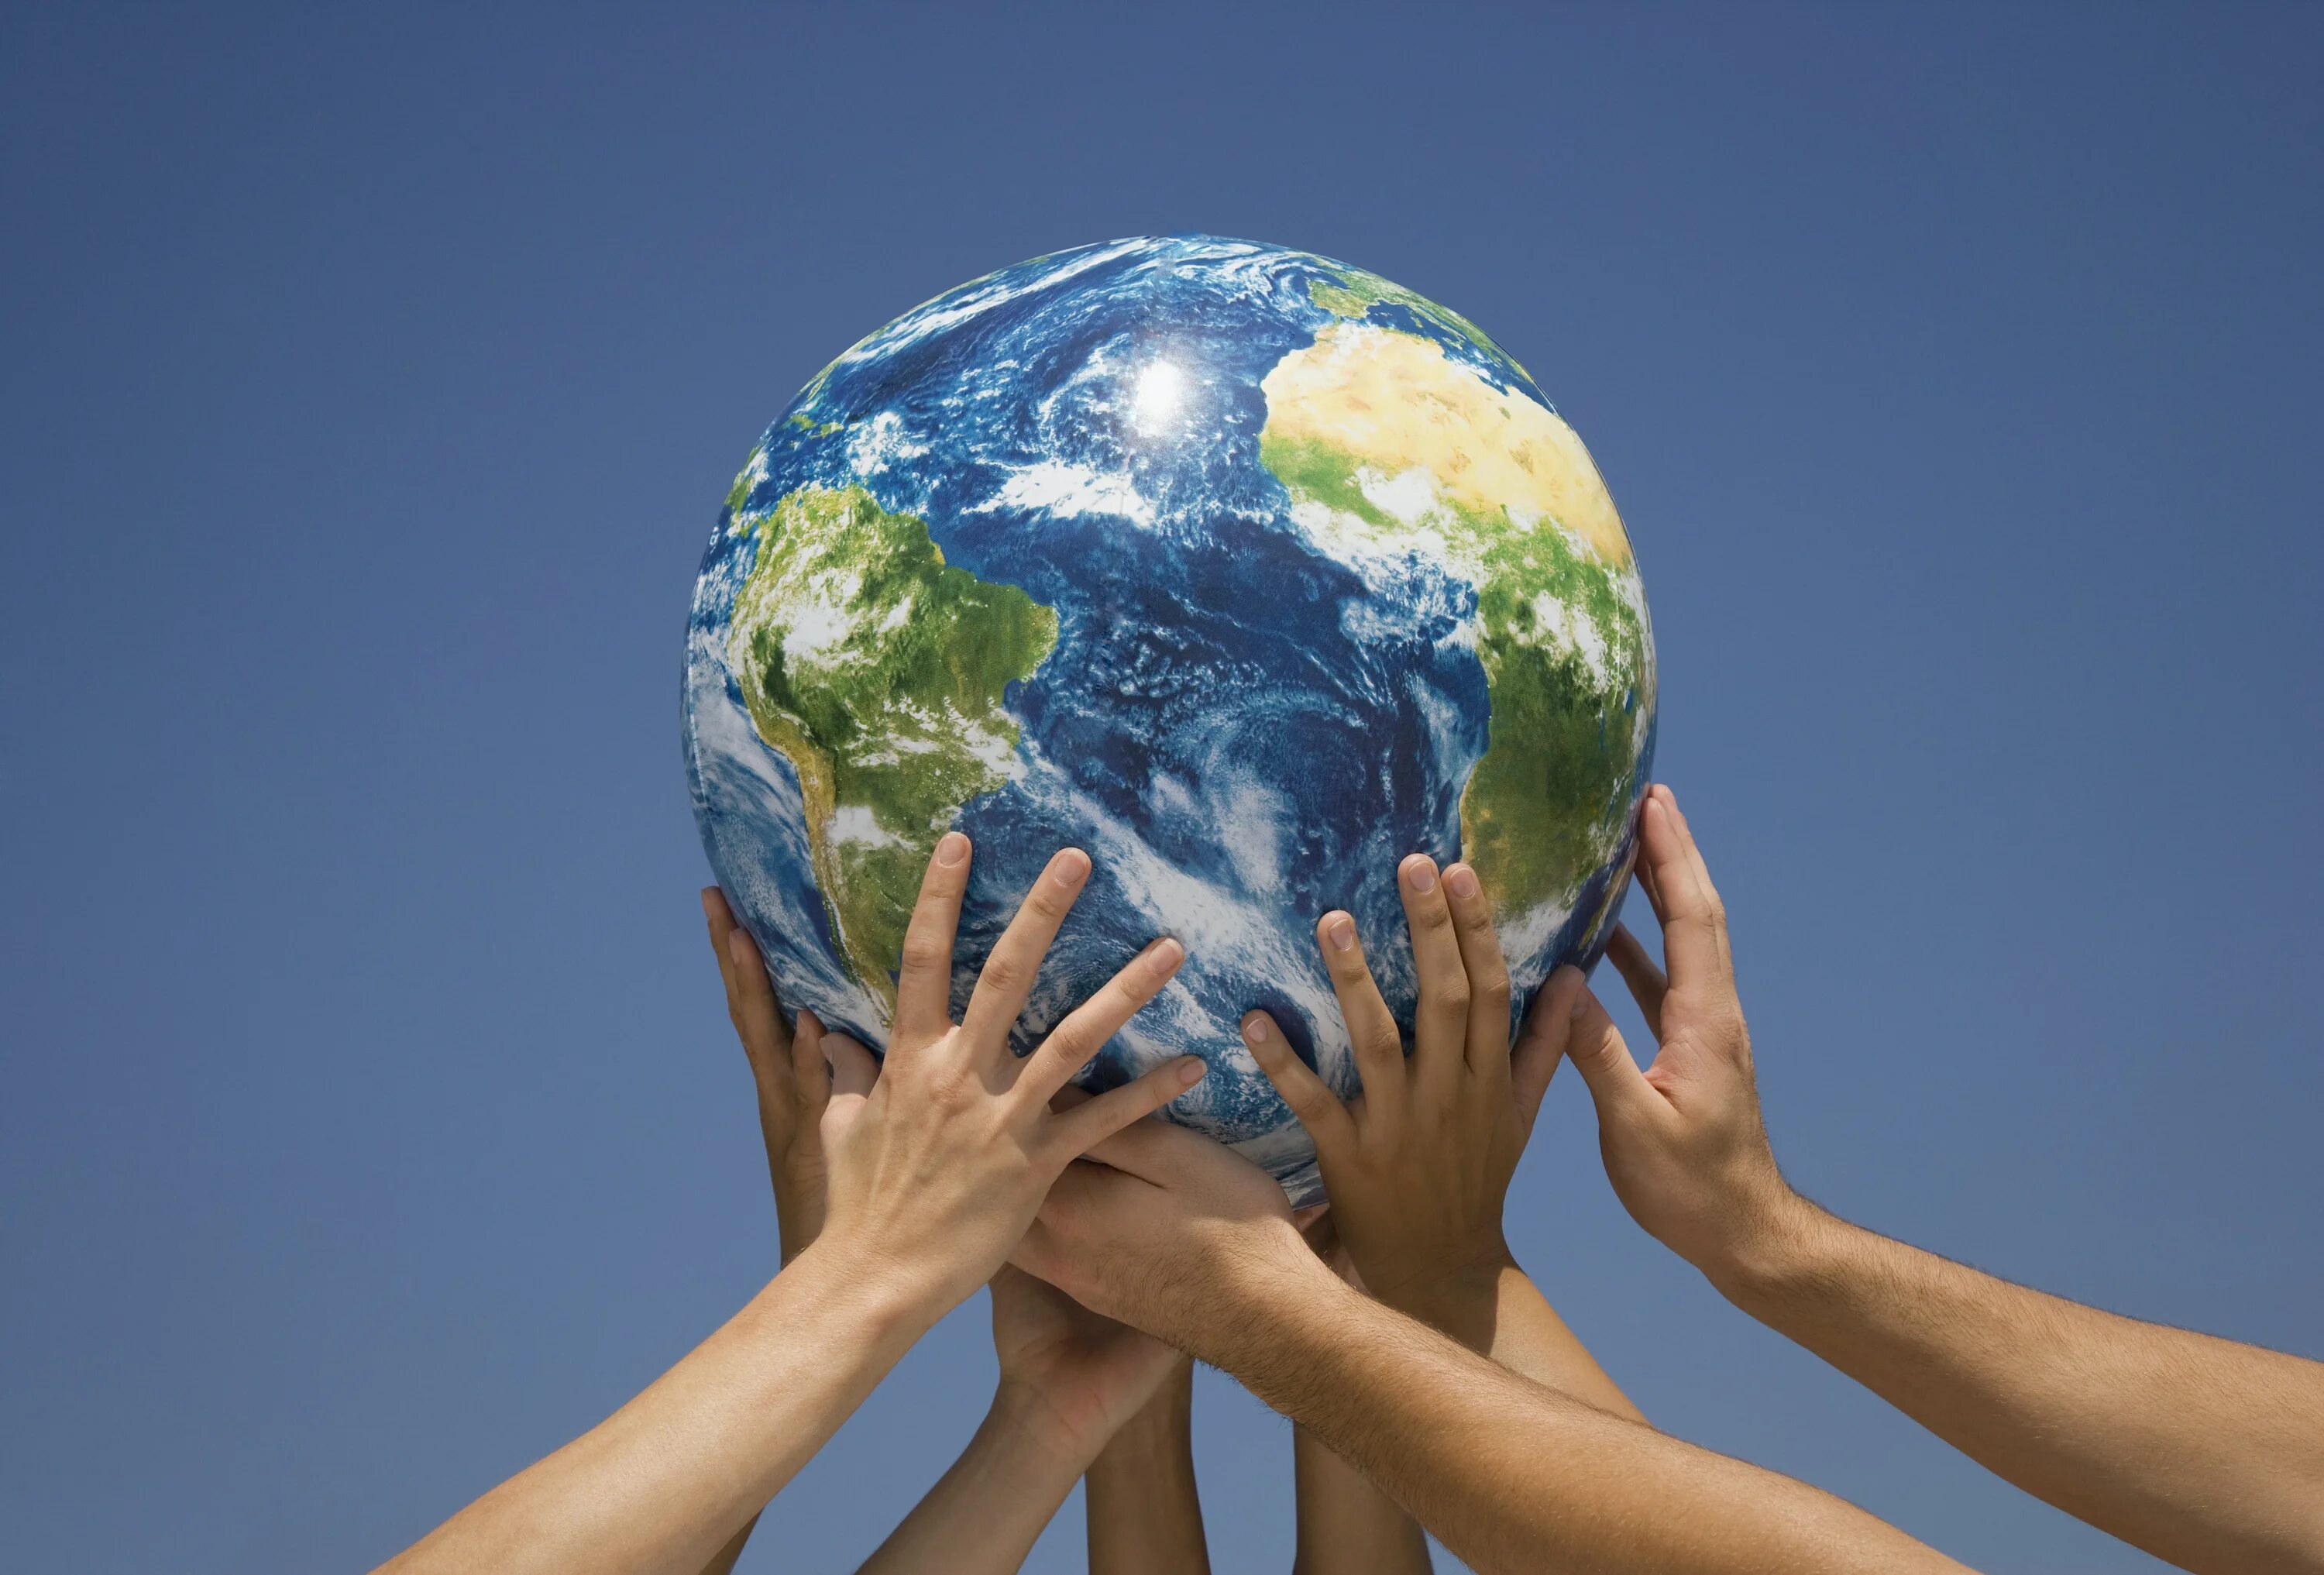 We are living in a world. Земной шар в руках человека. Планета в руках человека. Мир в руках человека. Земля в руках.